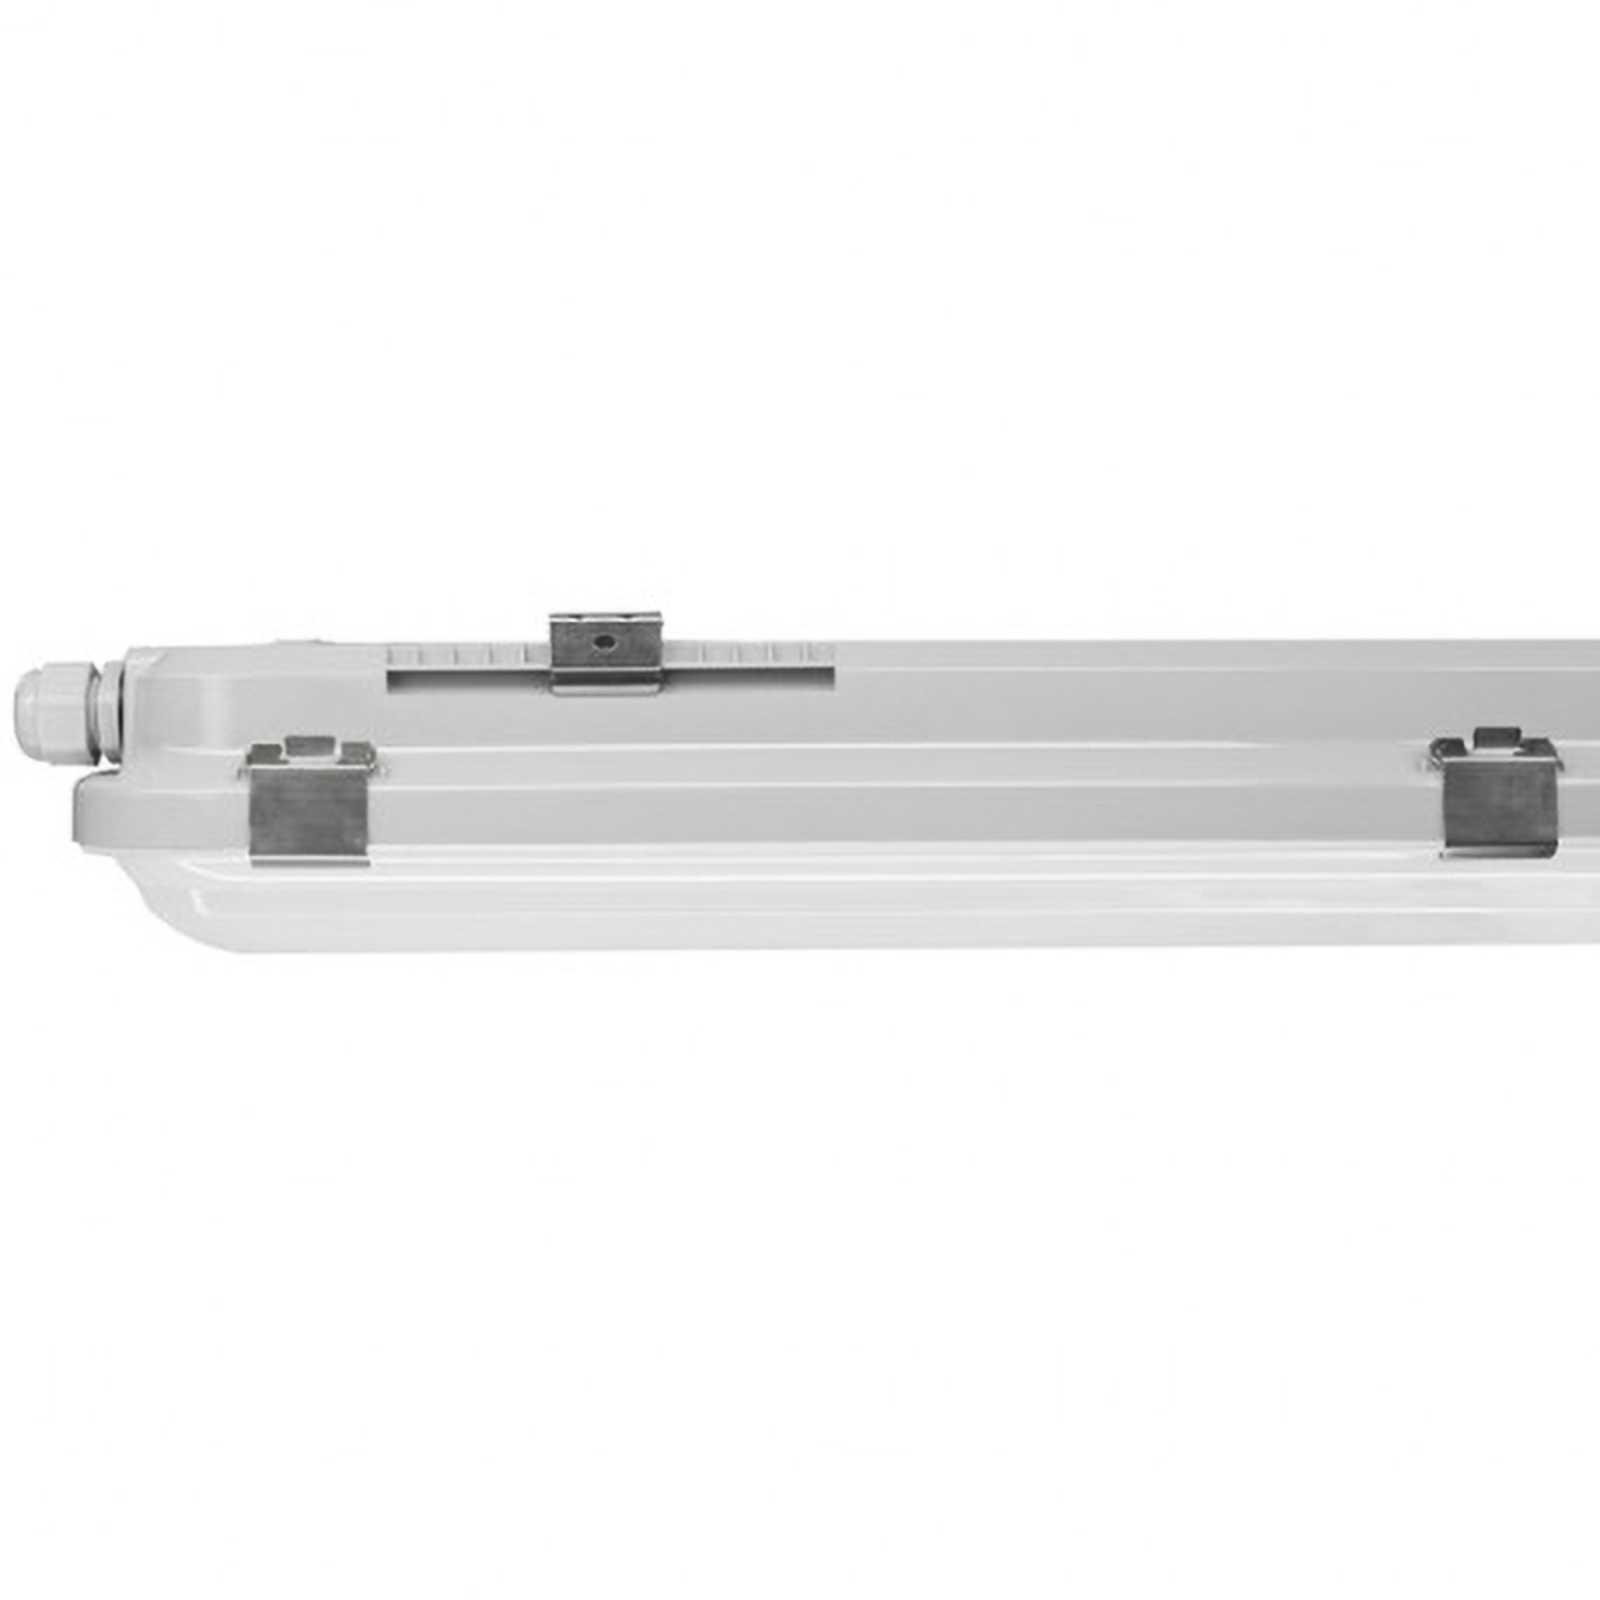 InnoGreen AQUOS 3.0 BASELine LED-lys 122cm 850